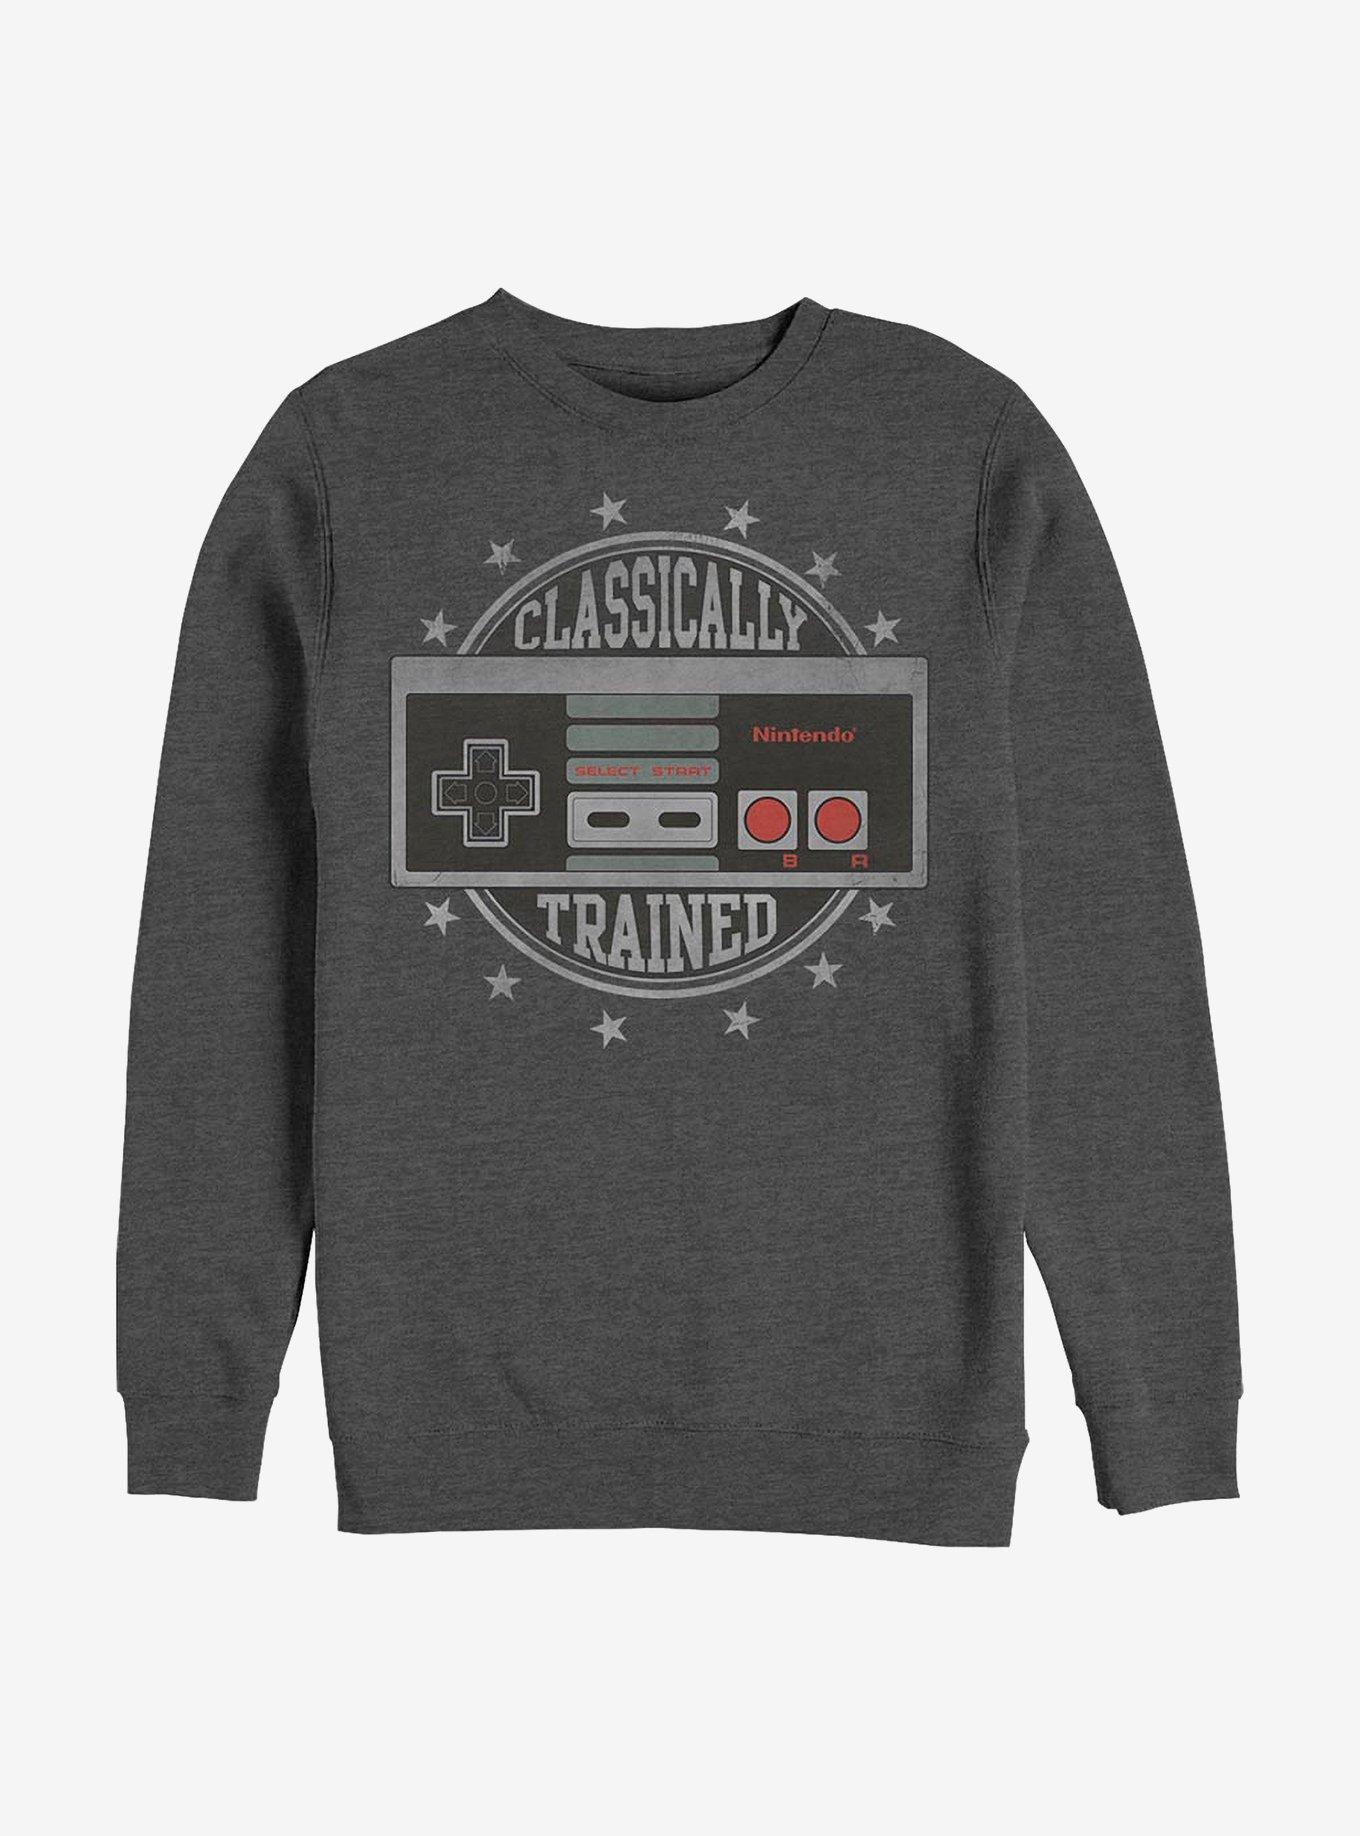 Nintendo Classically Trained Crew Sweatshirt, CHAR HTR, hi-res